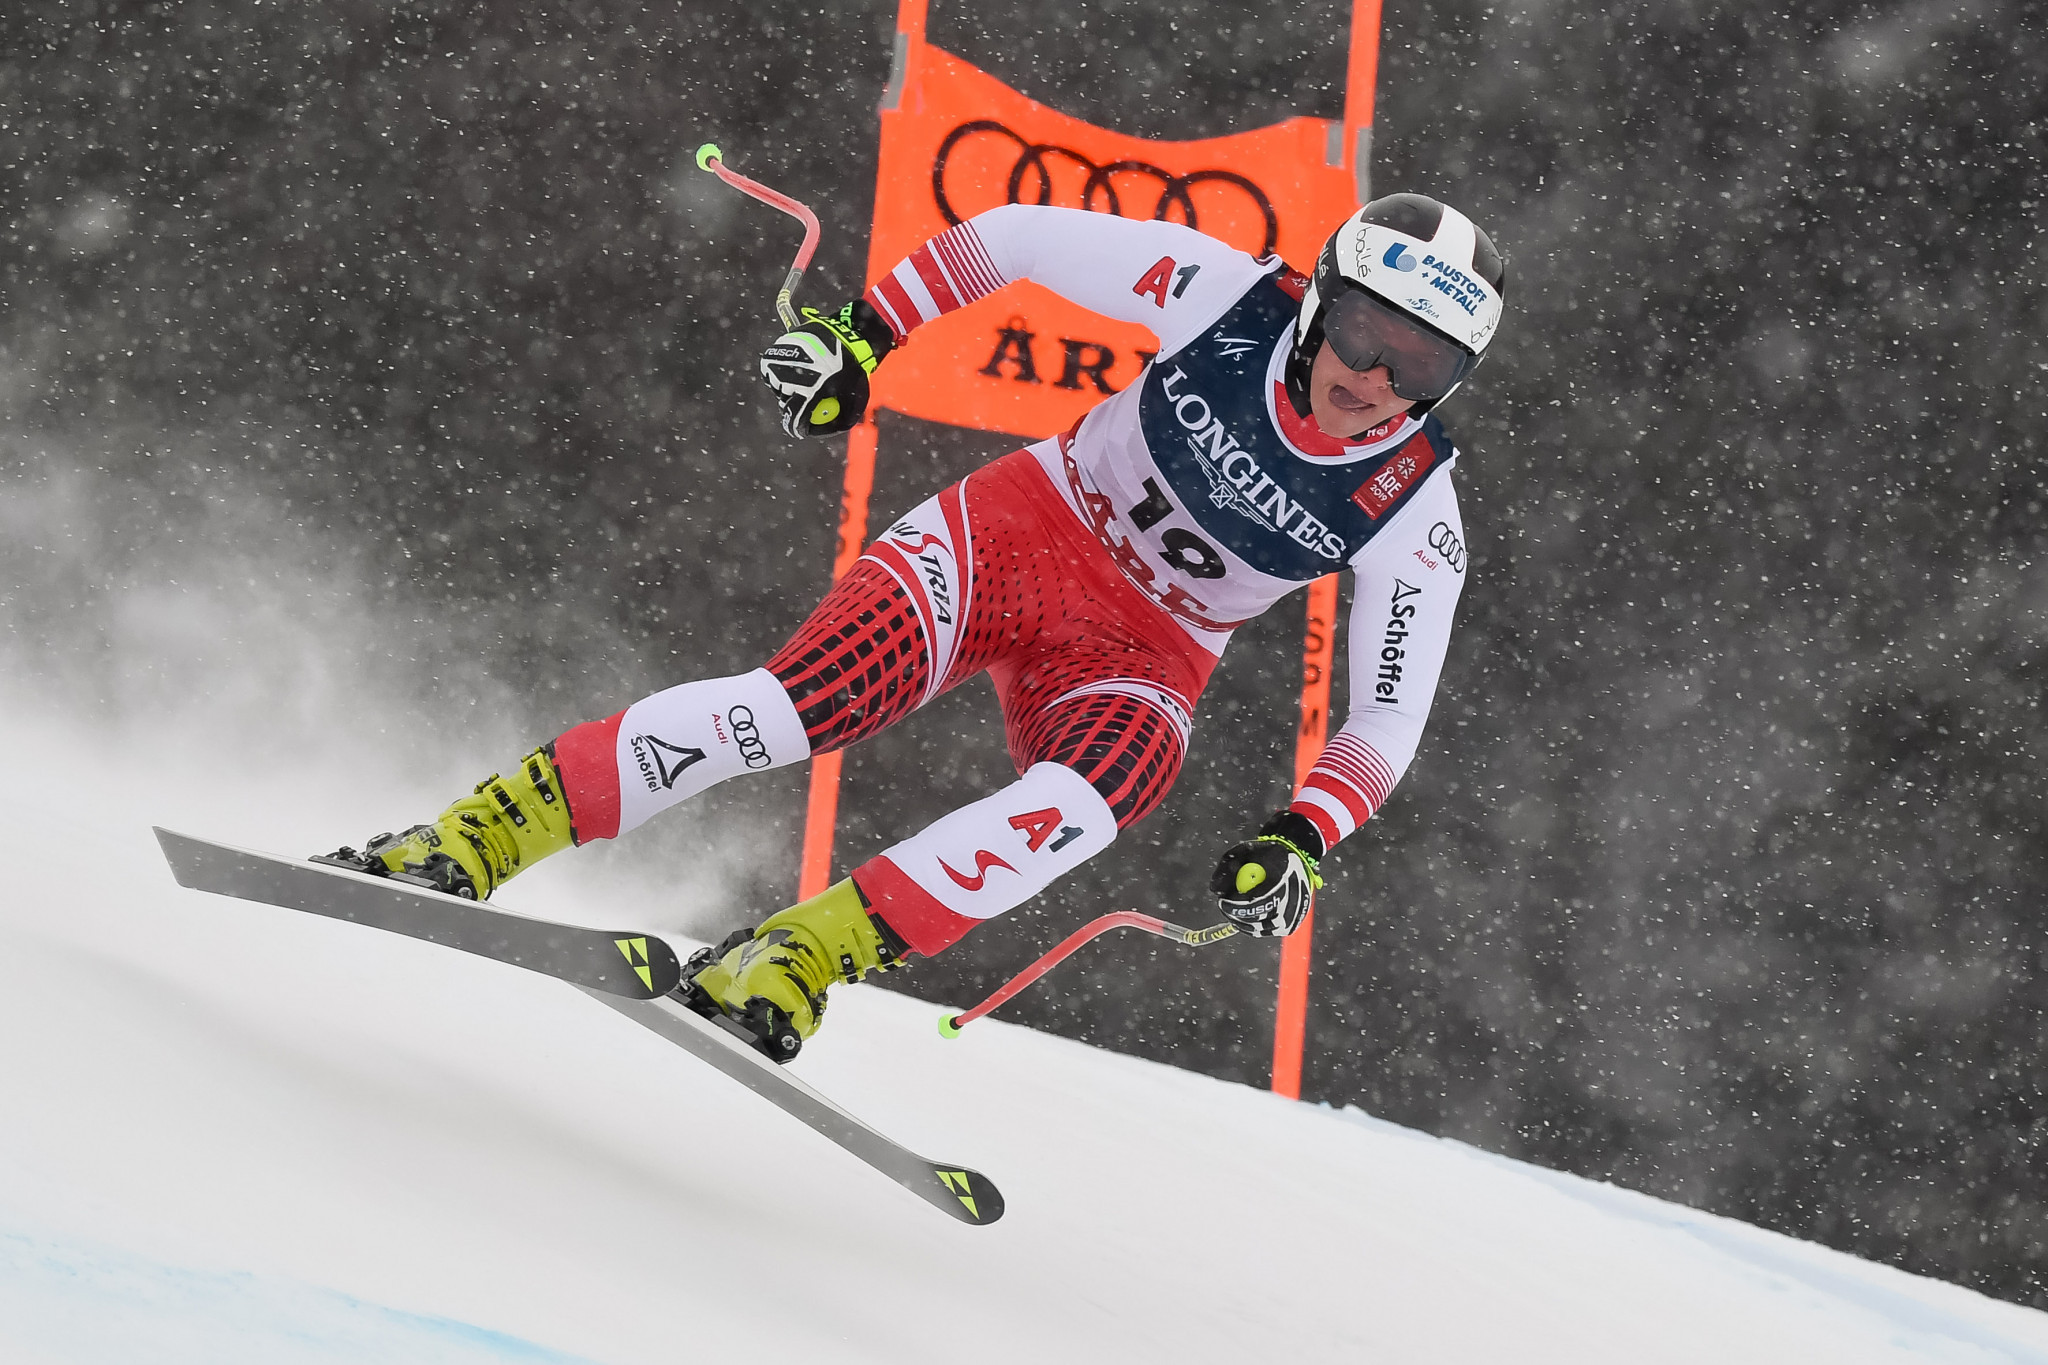 Austria’s Ramona Siebenhofer achieved the fastest downhill time ©Getty Images